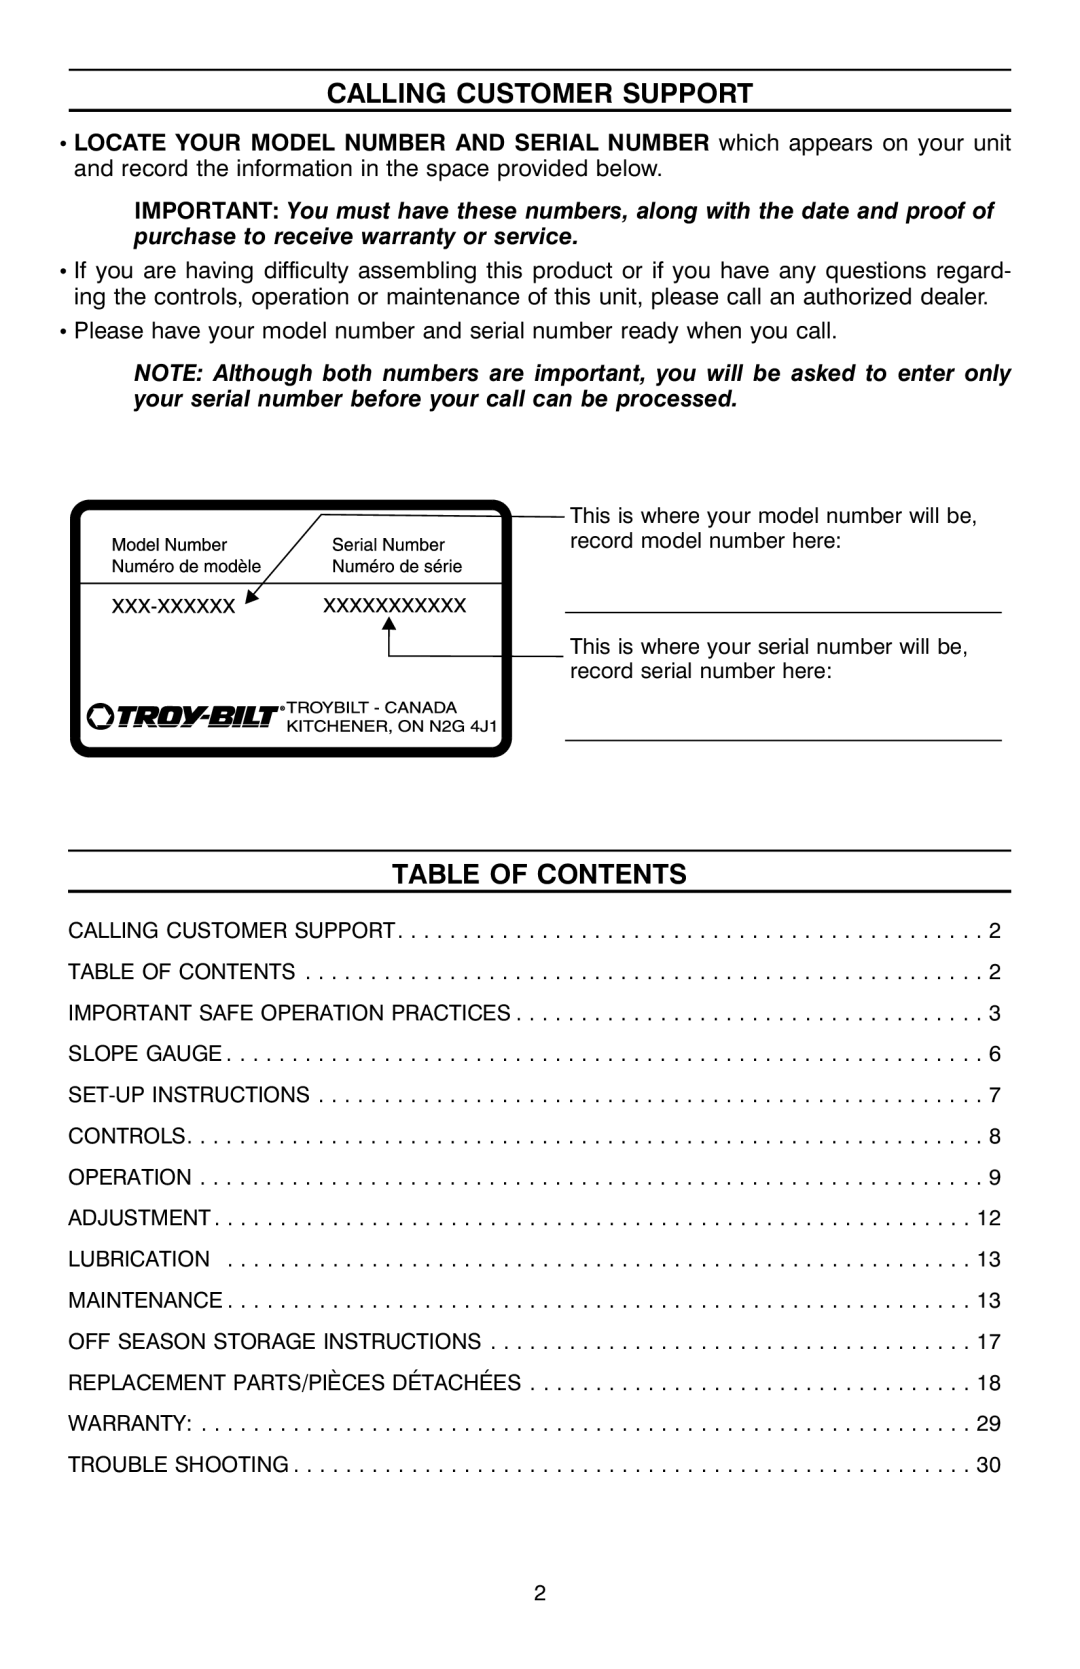 Troy-Bilt OG-4904 manual Calling Customer Support, Table Of Contents 